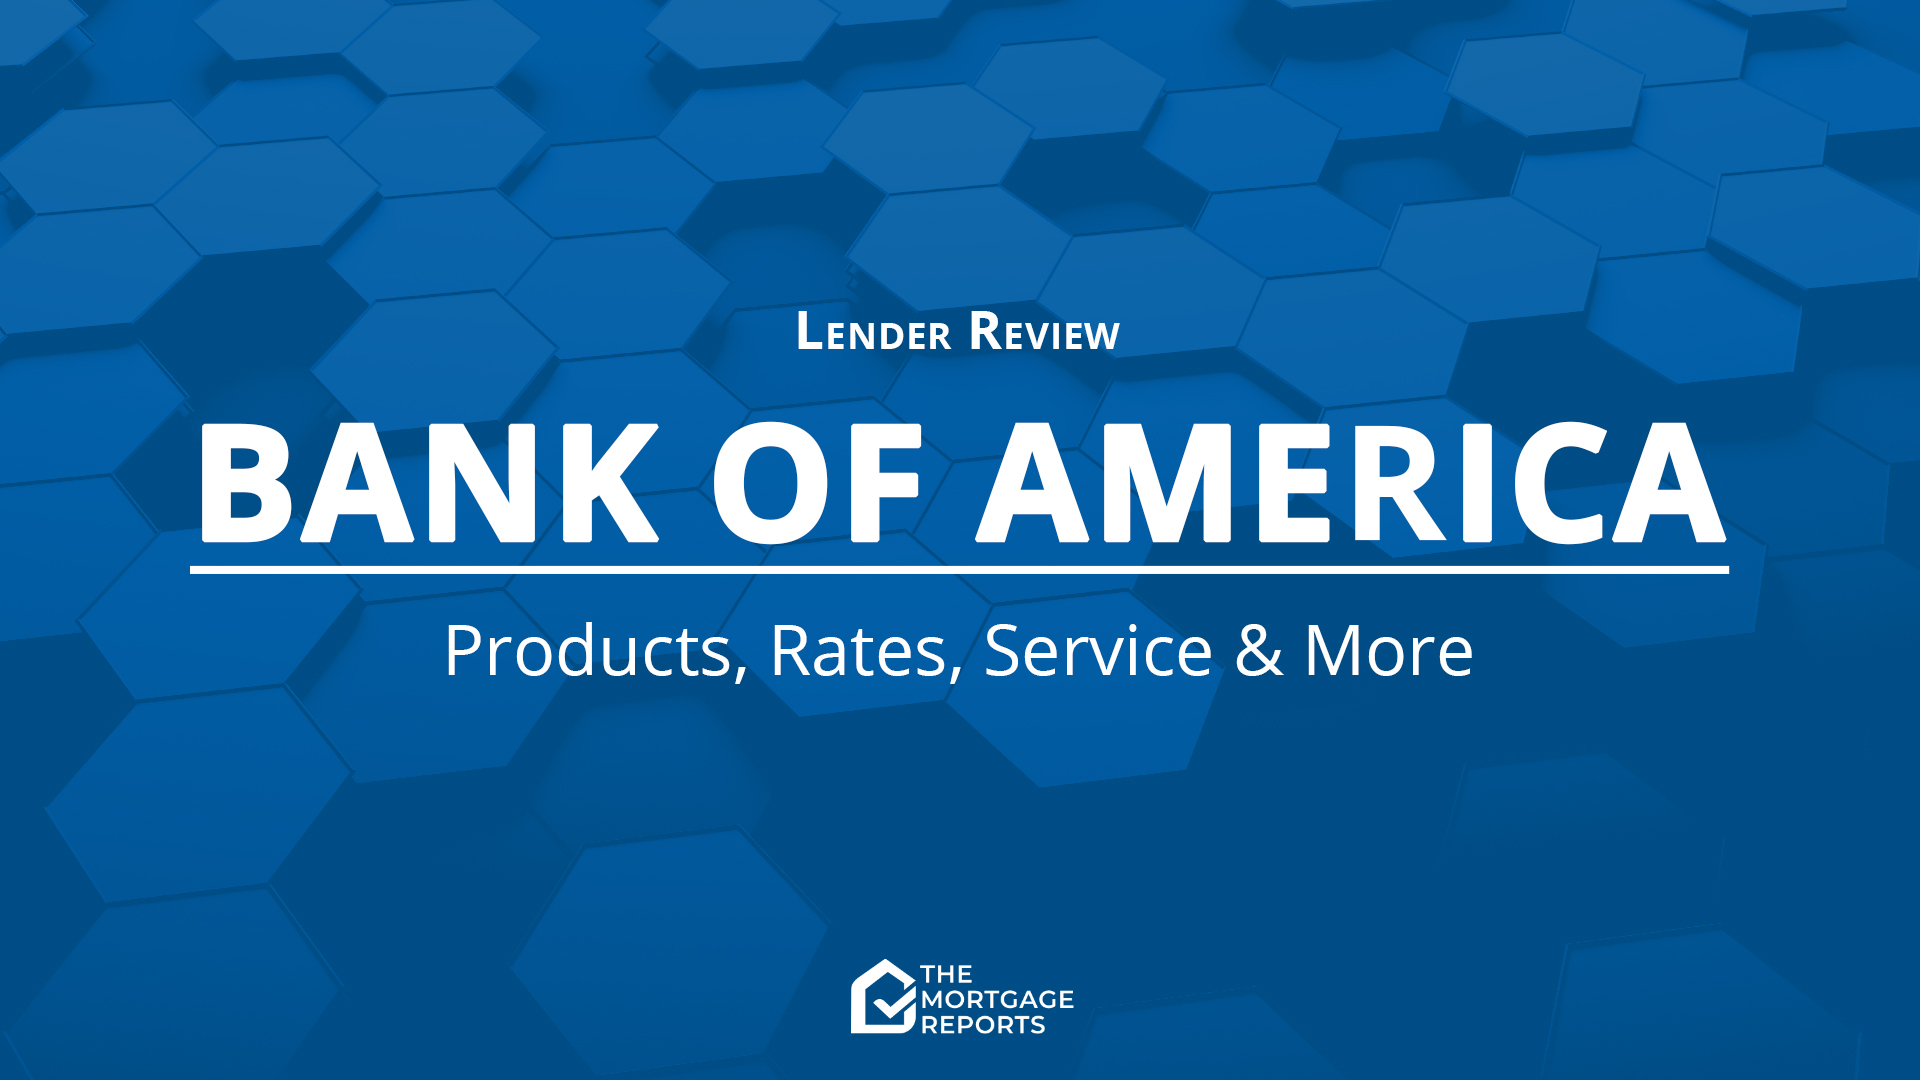 Bank of America Mortgage Reviews